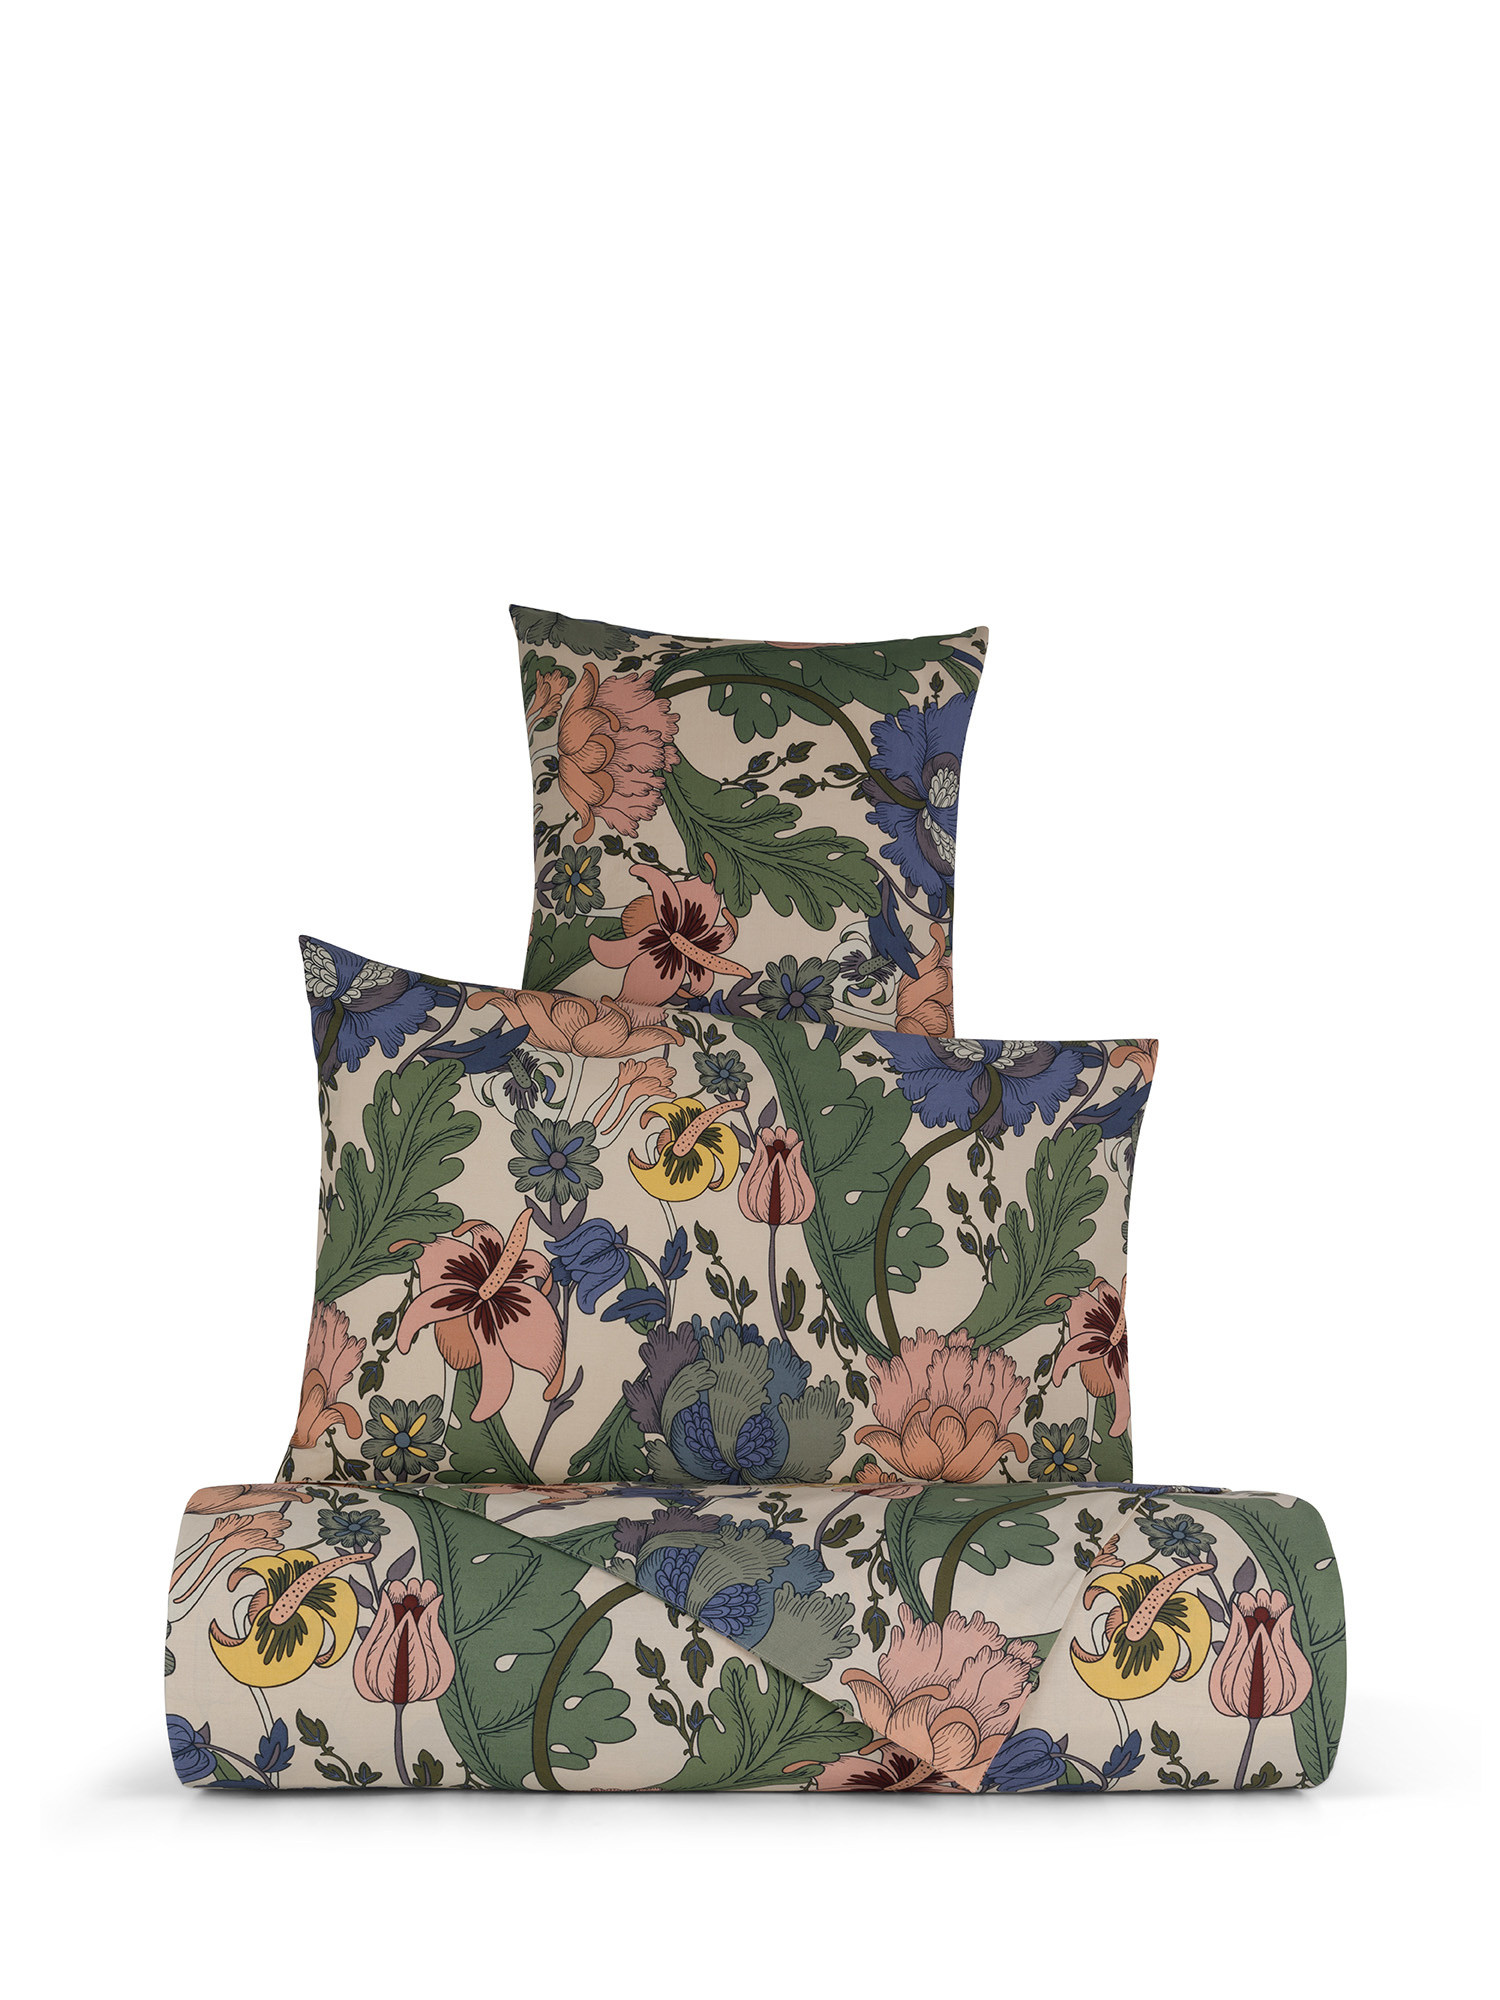 Floral patterned cotton percale sheet set, Multicolor, large image number 0